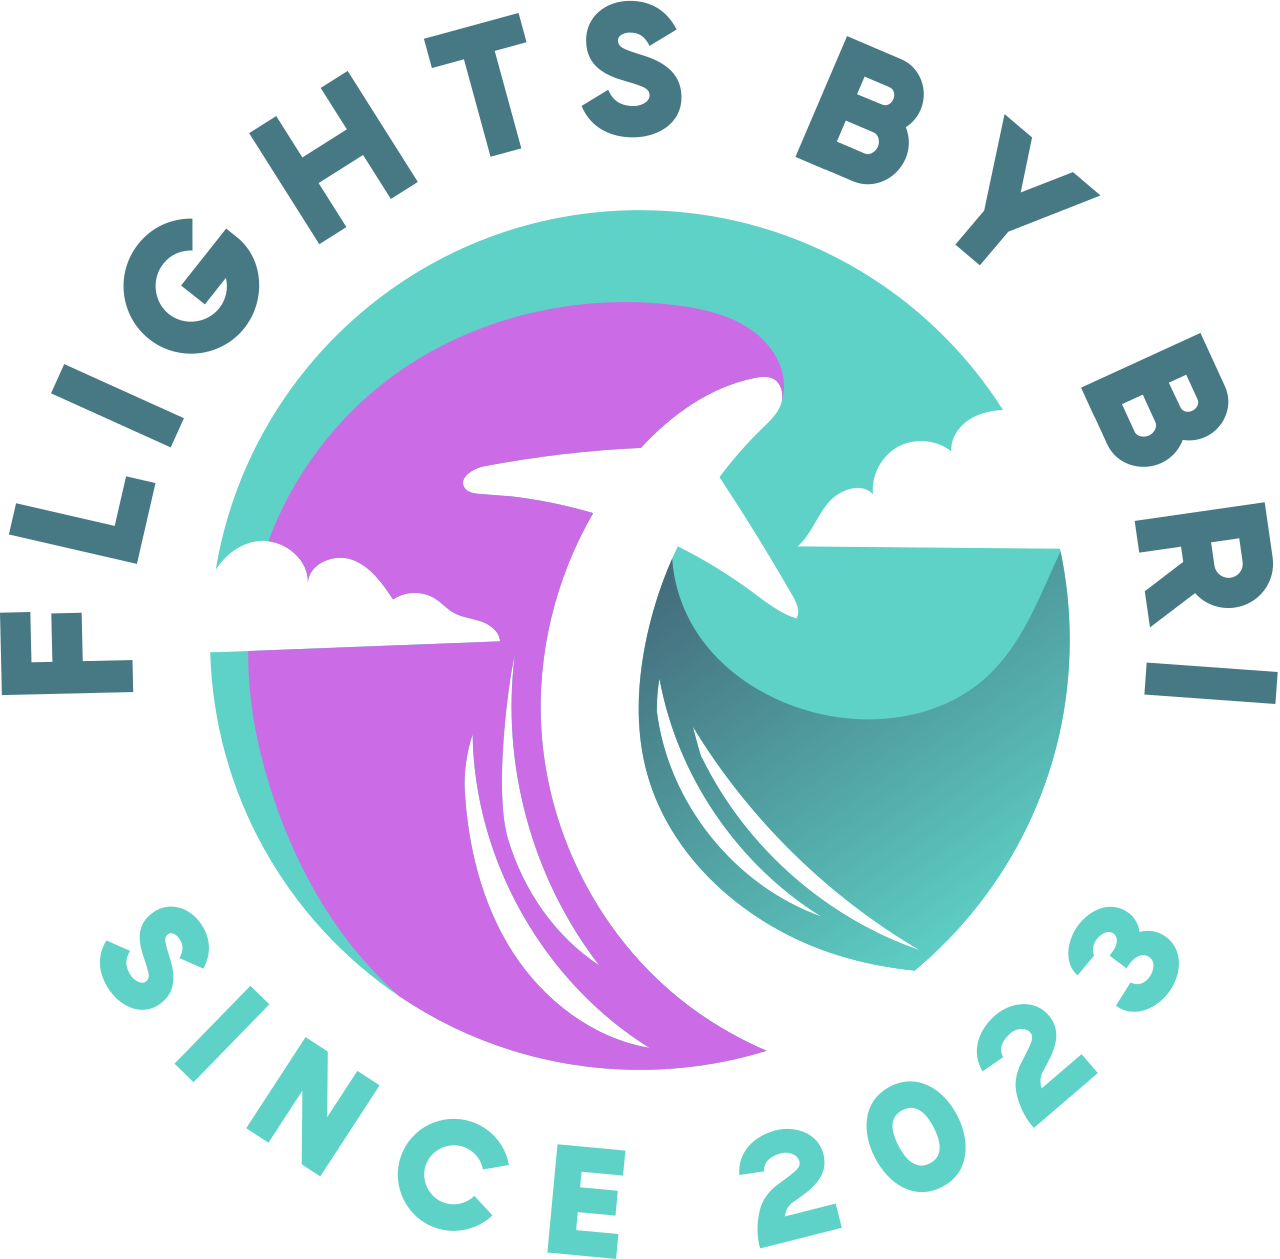 Flights by Bri's logo